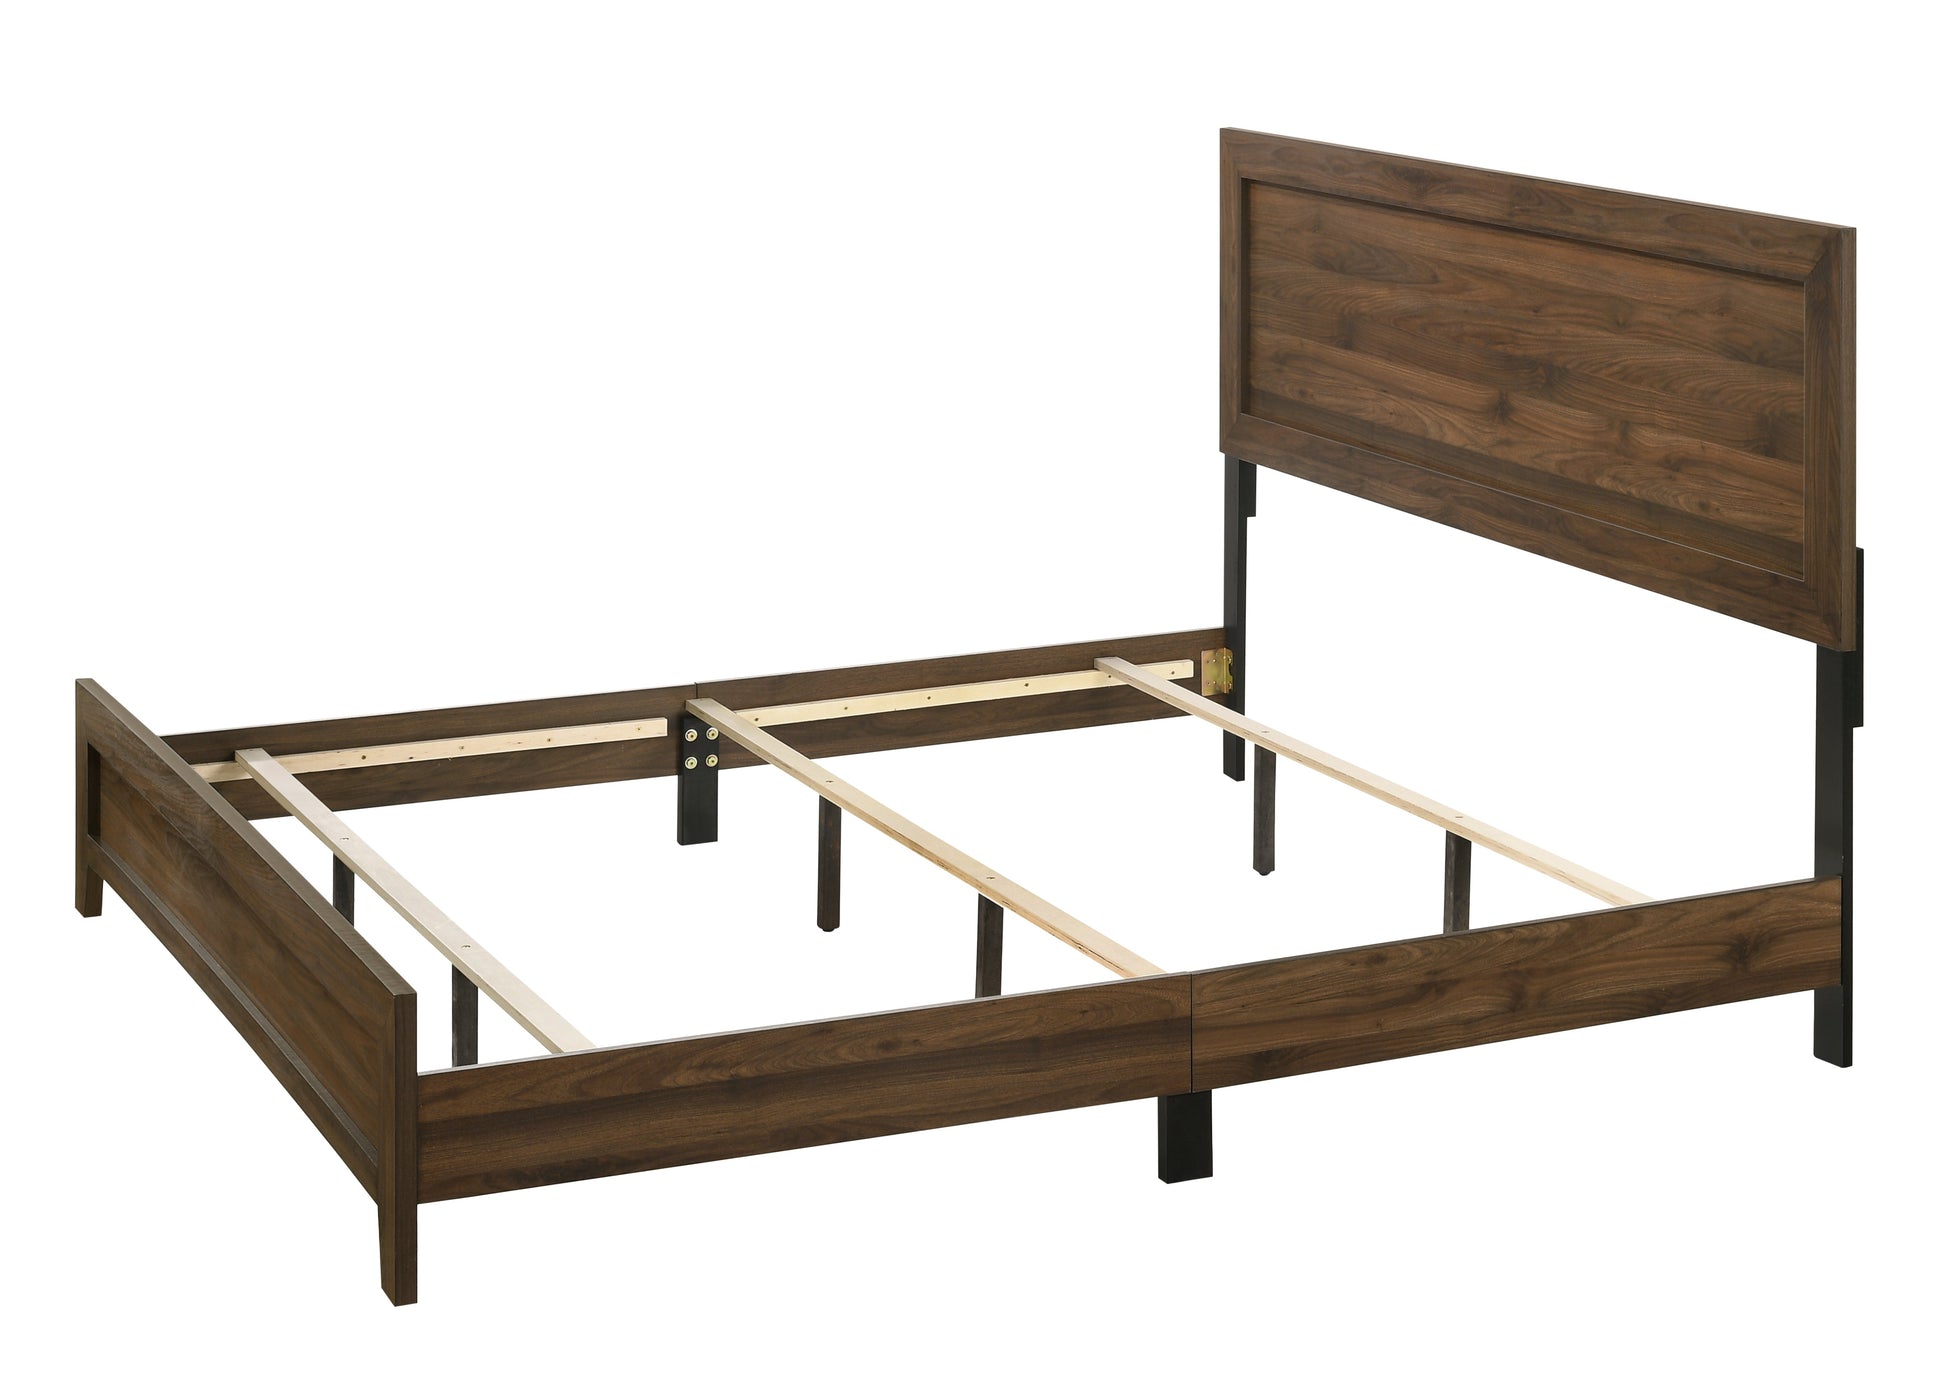 Millie Cherry Brown Finish Transitional Modern Wood Grain Panel Bedroom Set